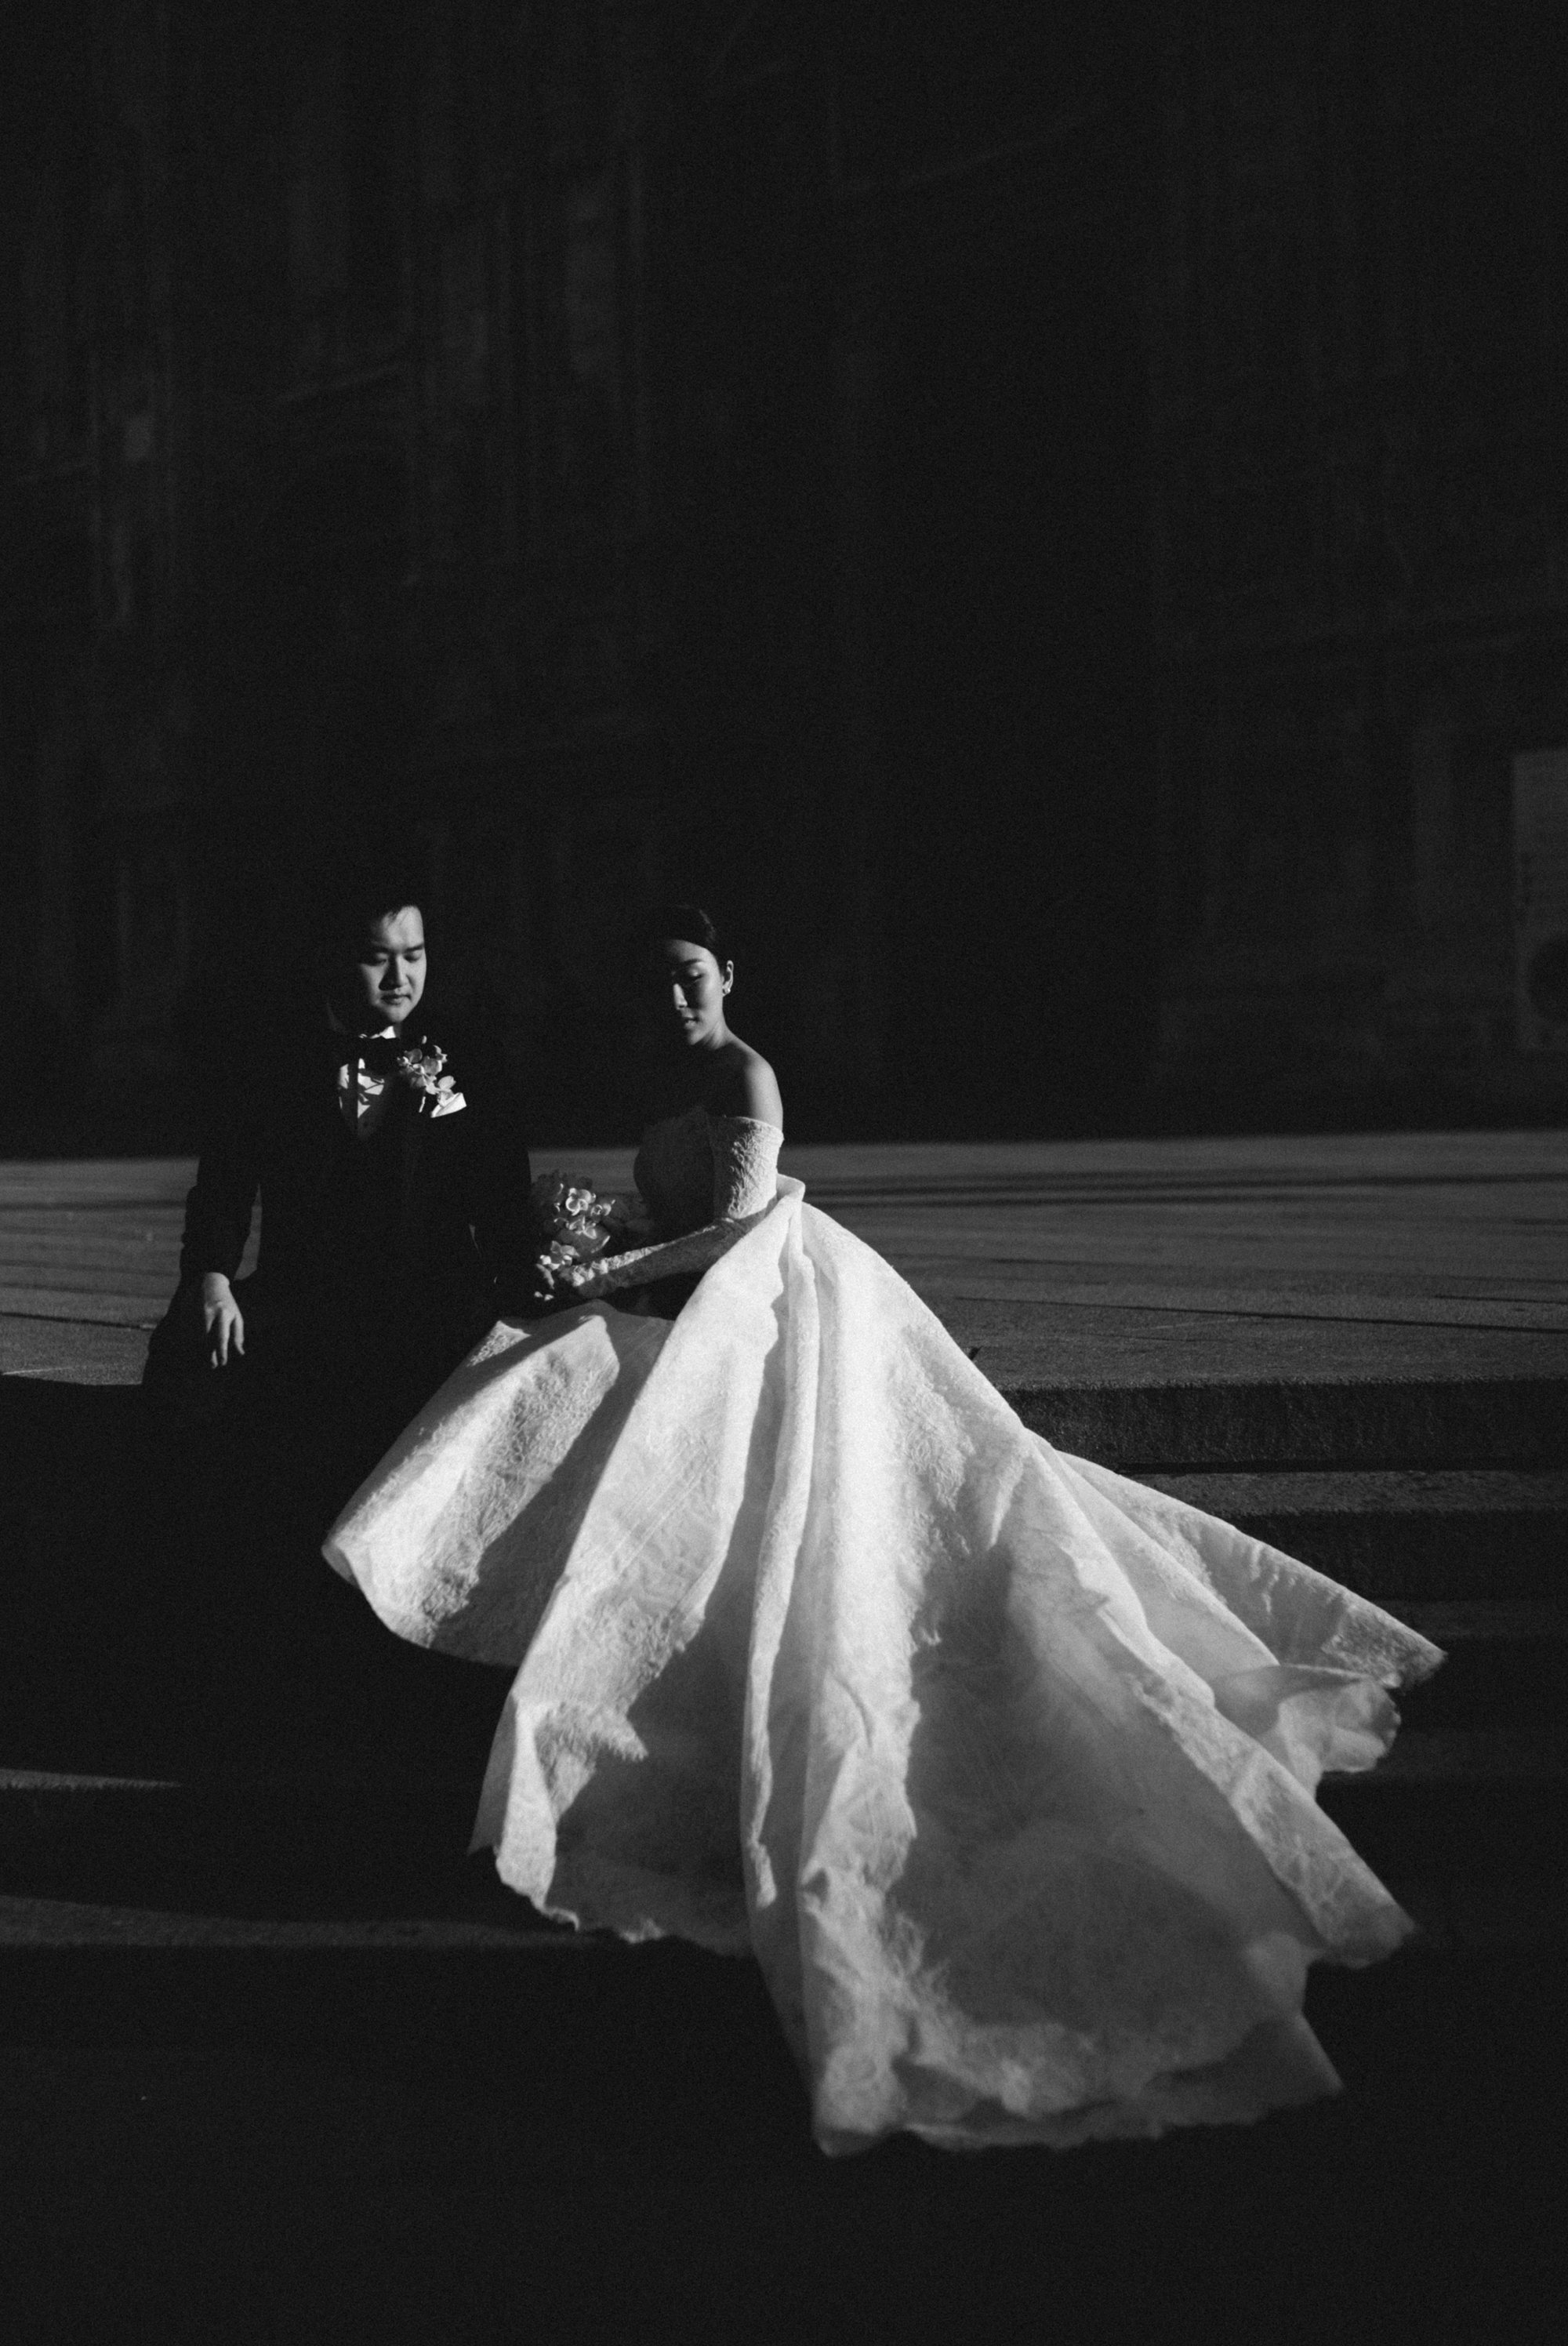 Prawira-Evelyn-Dolomites-Italy-Santre wedding-Yefta Gunawan-Jeriko MUA-Carol Kuntjoro Photography-30.jpg